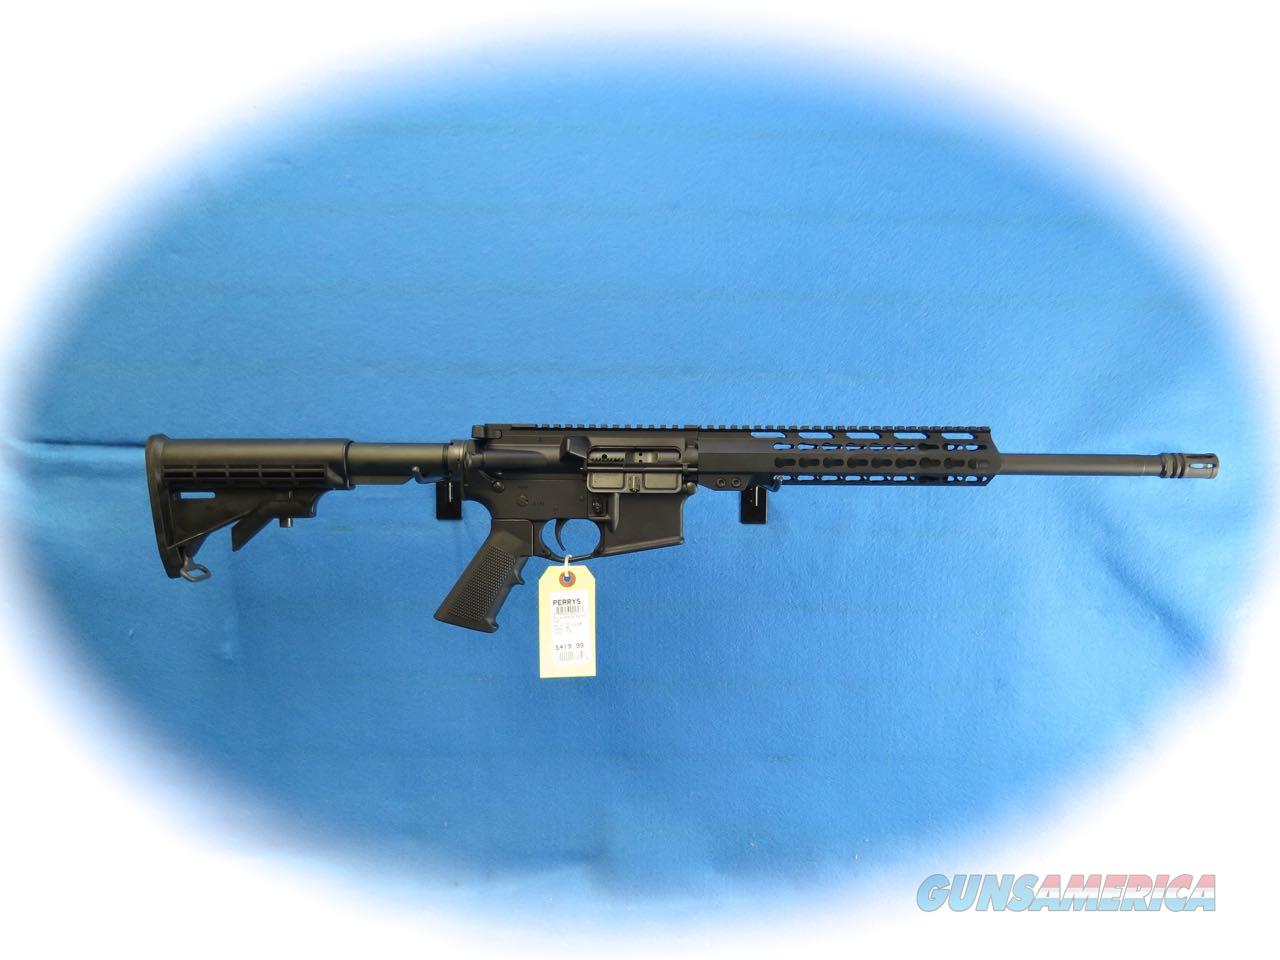 DEL-TON ECHO 316H-KM 5.56mm Cal AR... for sale at Gunsamerica.com ...